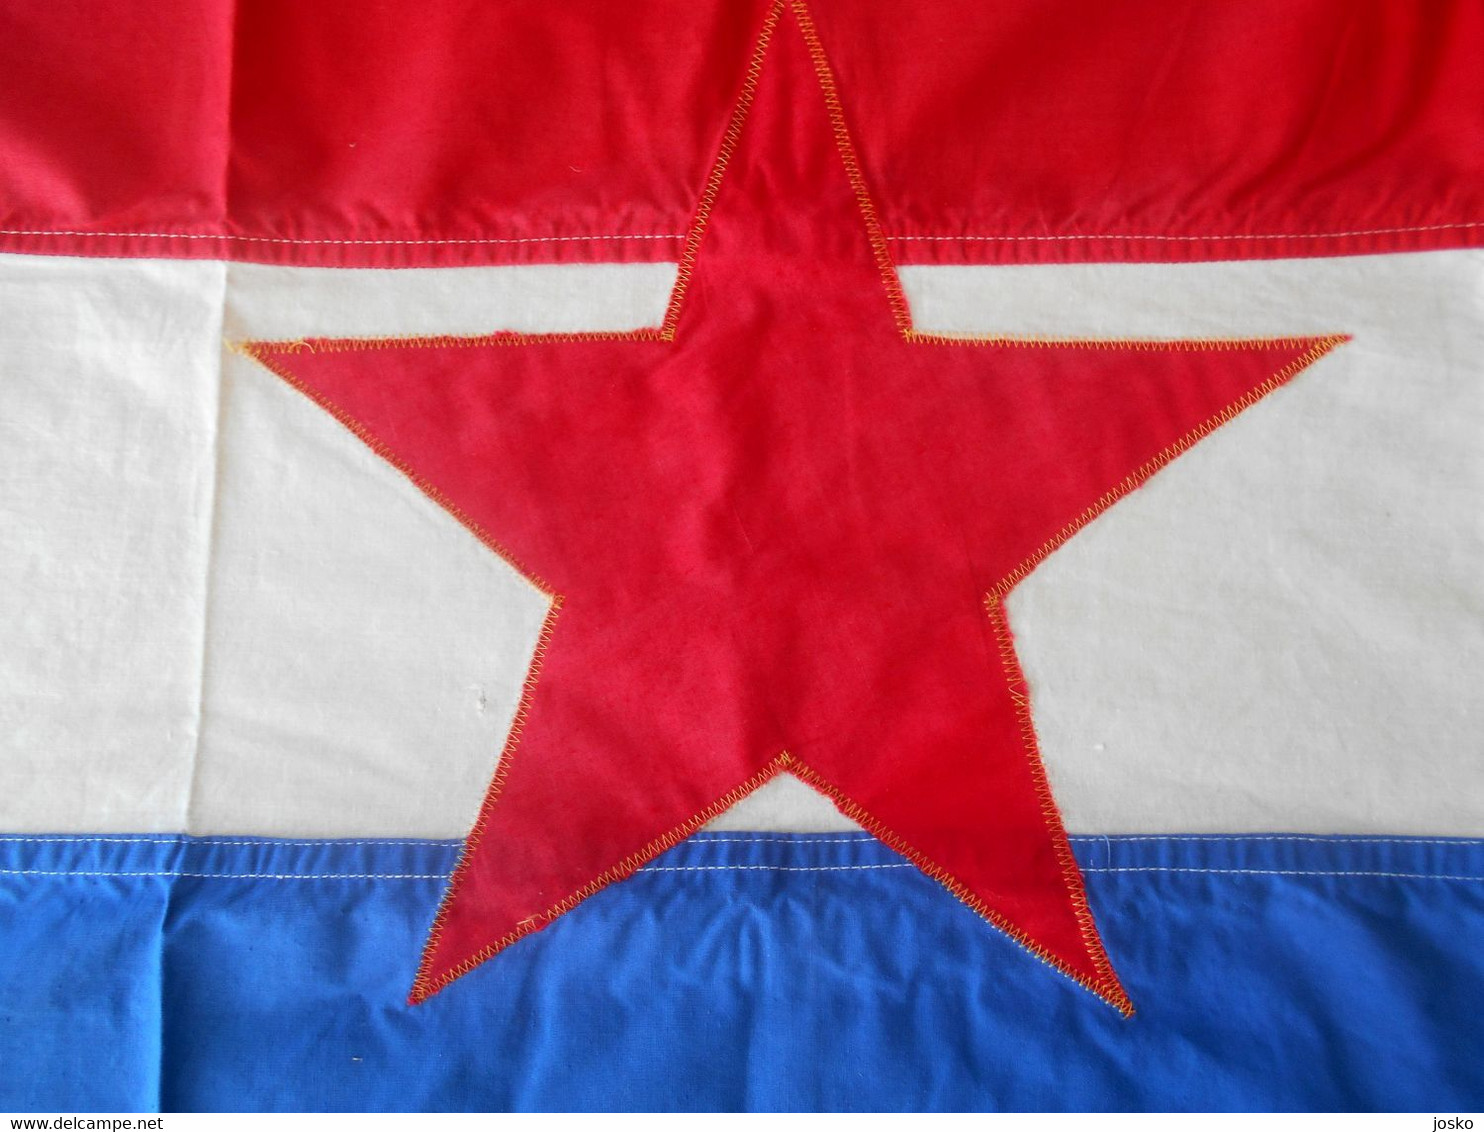 CROATIA Ex YUGOSLAVIA Original Vintage Communist Flag 1980s LARGER SIZE Drapeau Flagge Bandiera Kroatien Croatie Croazia - Flags